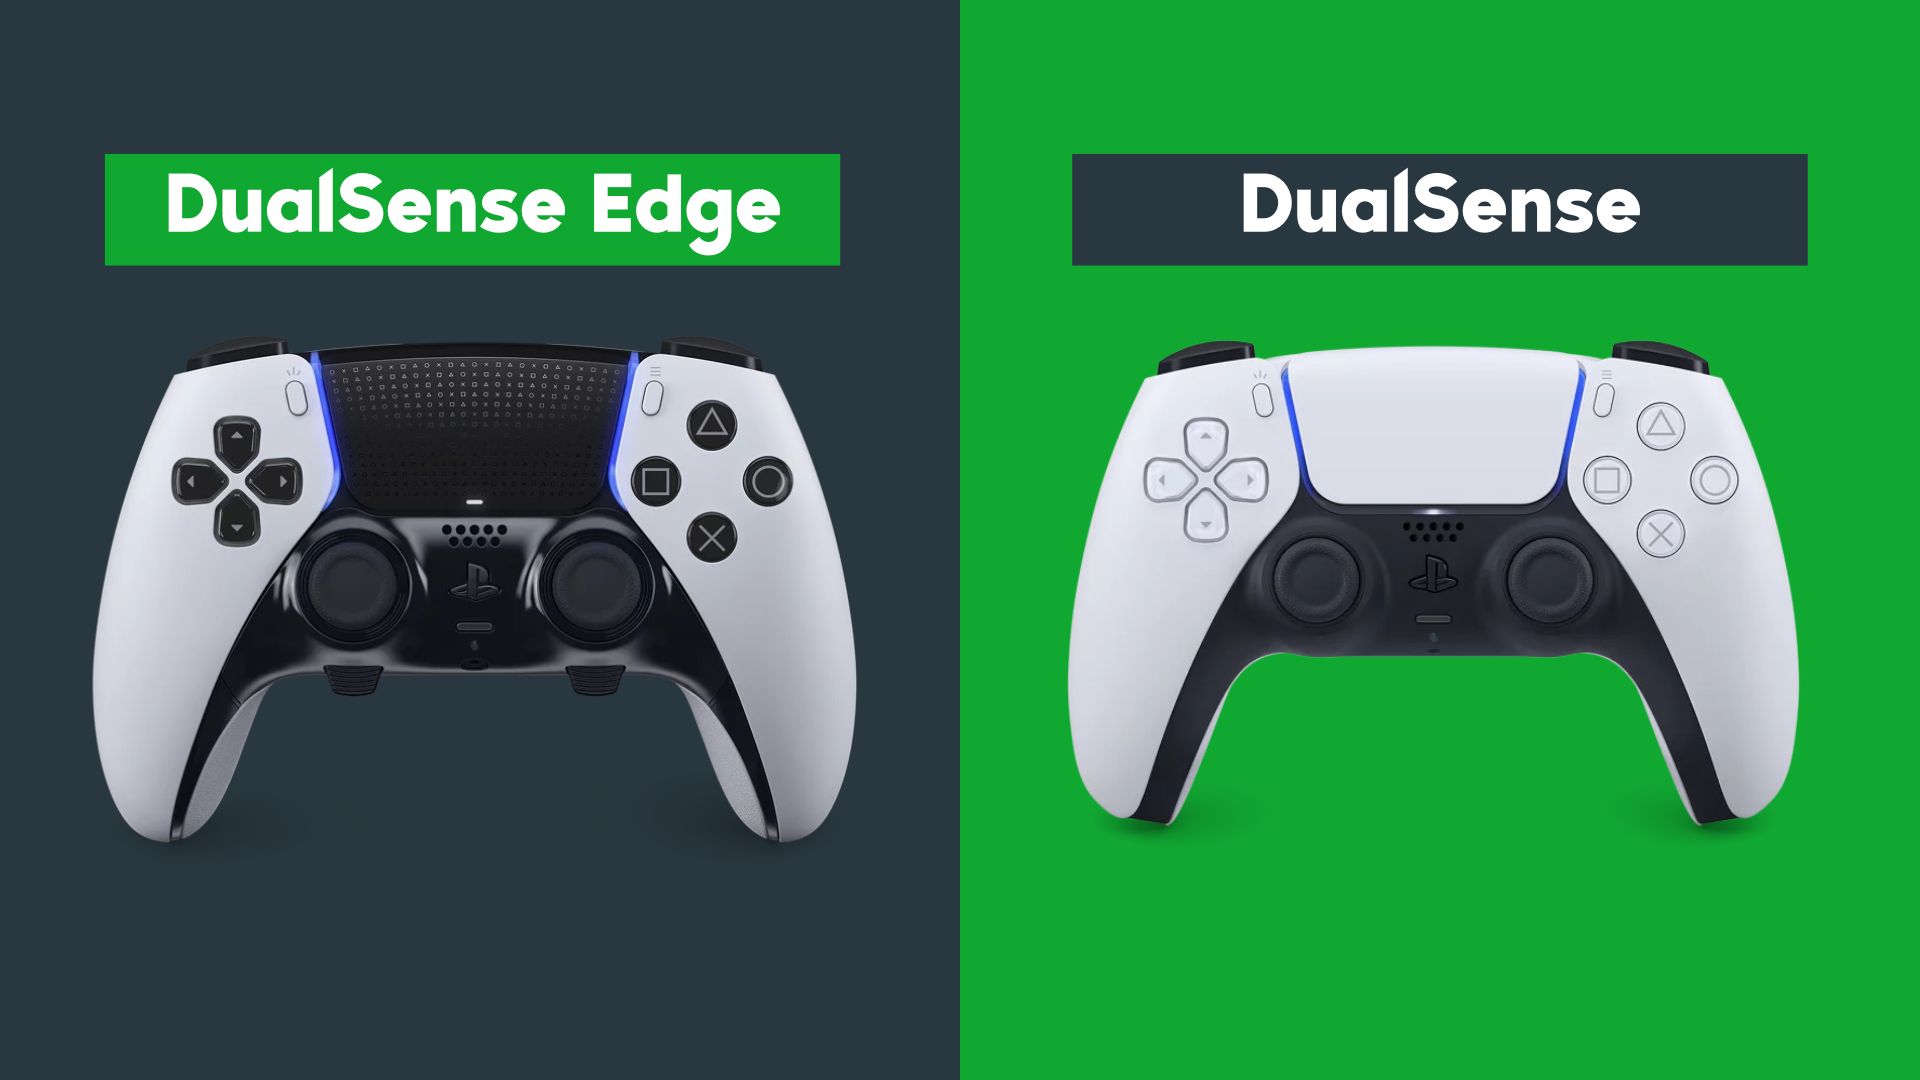 DualSense vs DualSense Edge